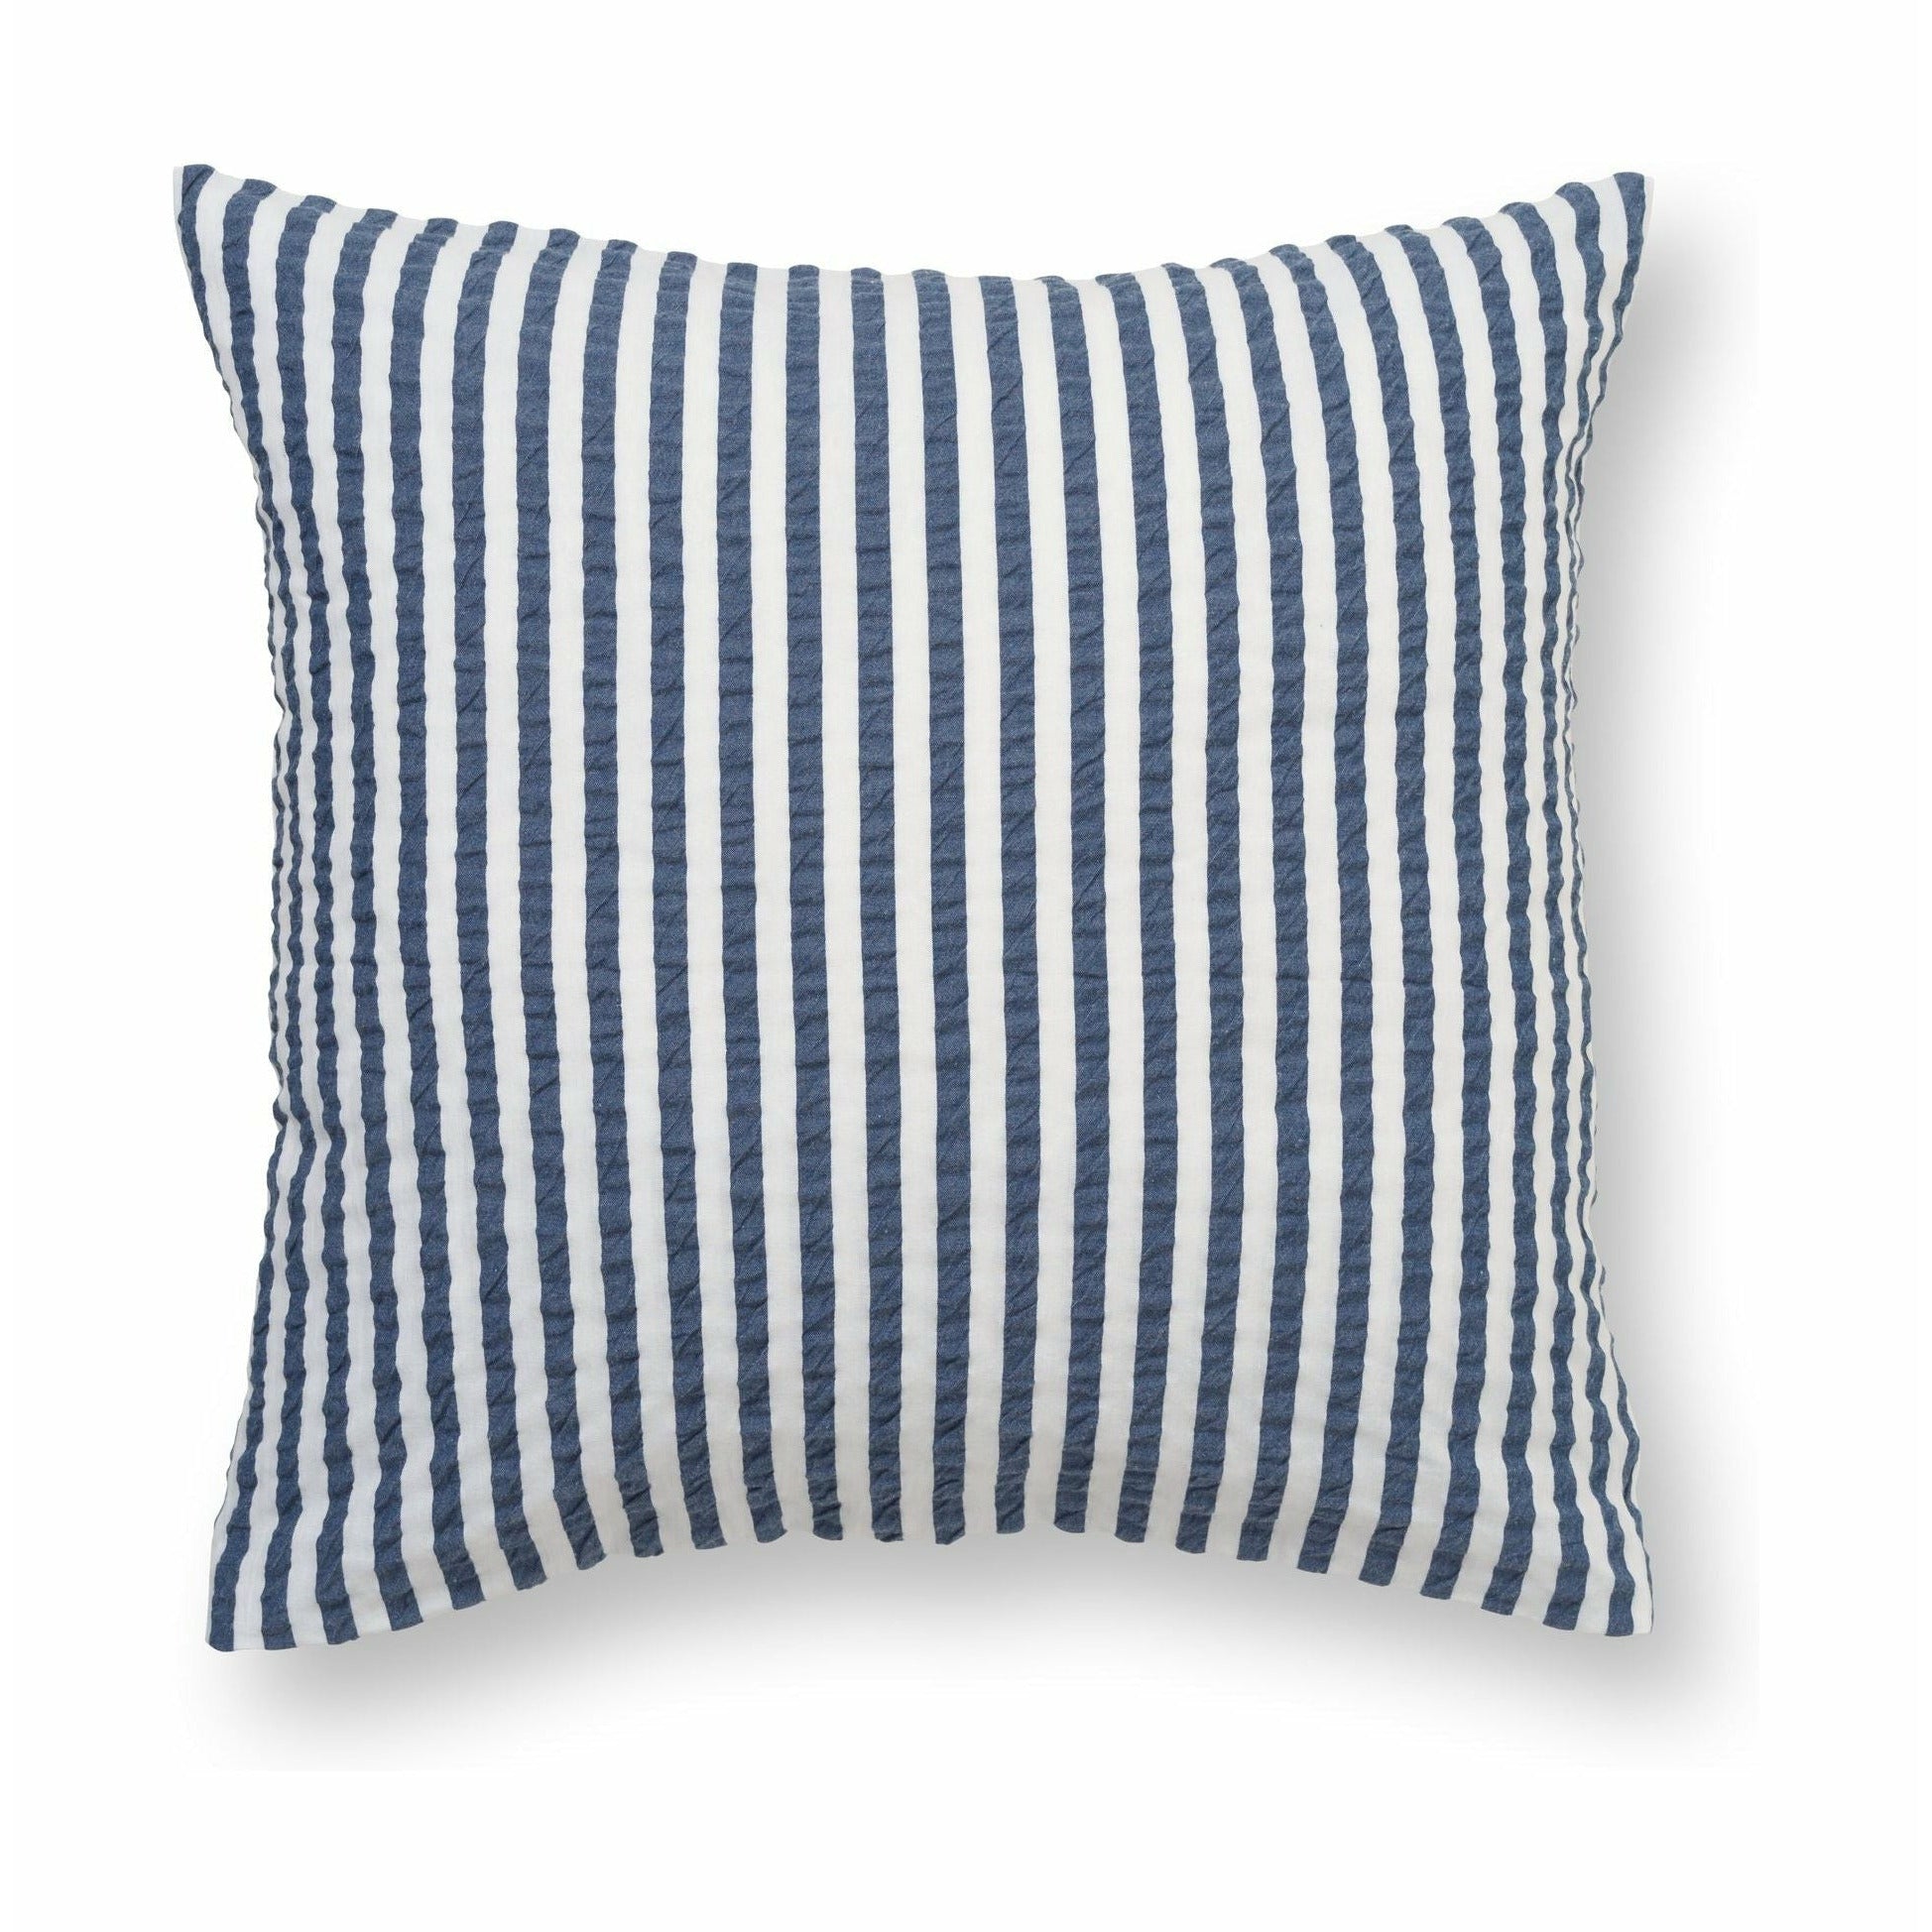 Juna Bæk & Bølge Lines Pillowcase 63x60 cm, ciemnoniebieski/biały